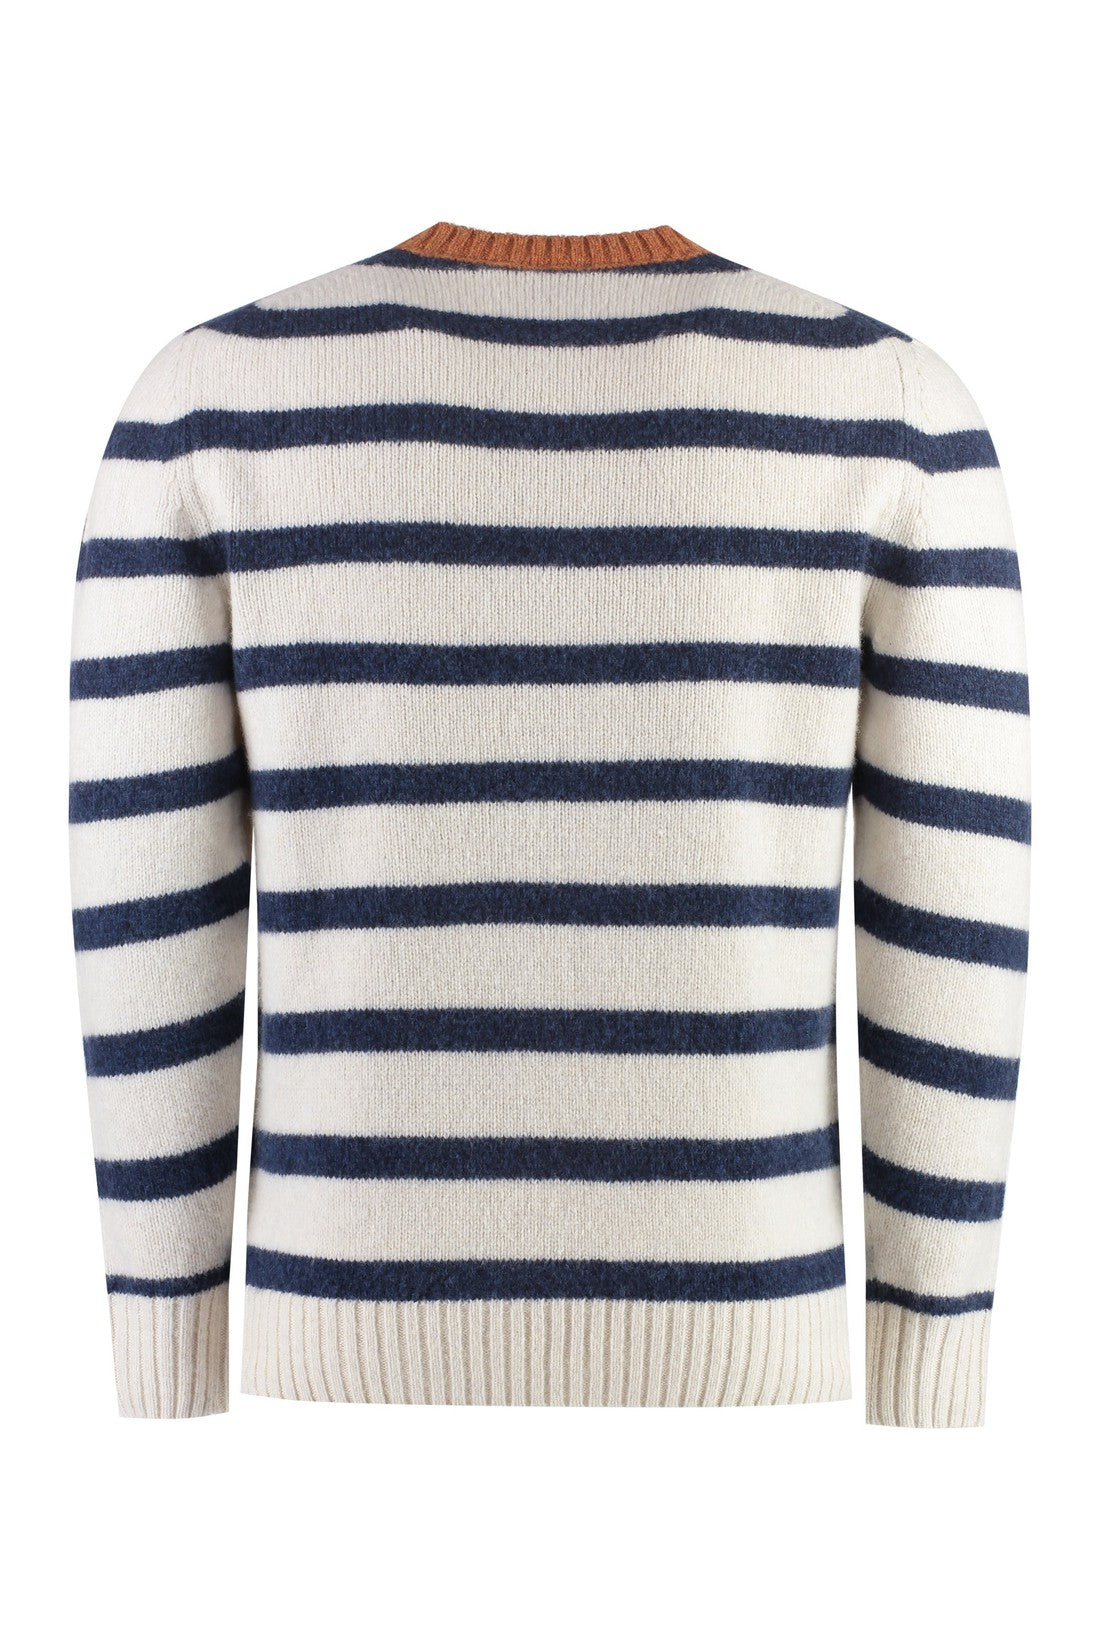 Piralo-OUTLET-SALE-Wool-blend crew-neck sweater-ARCHIVIST